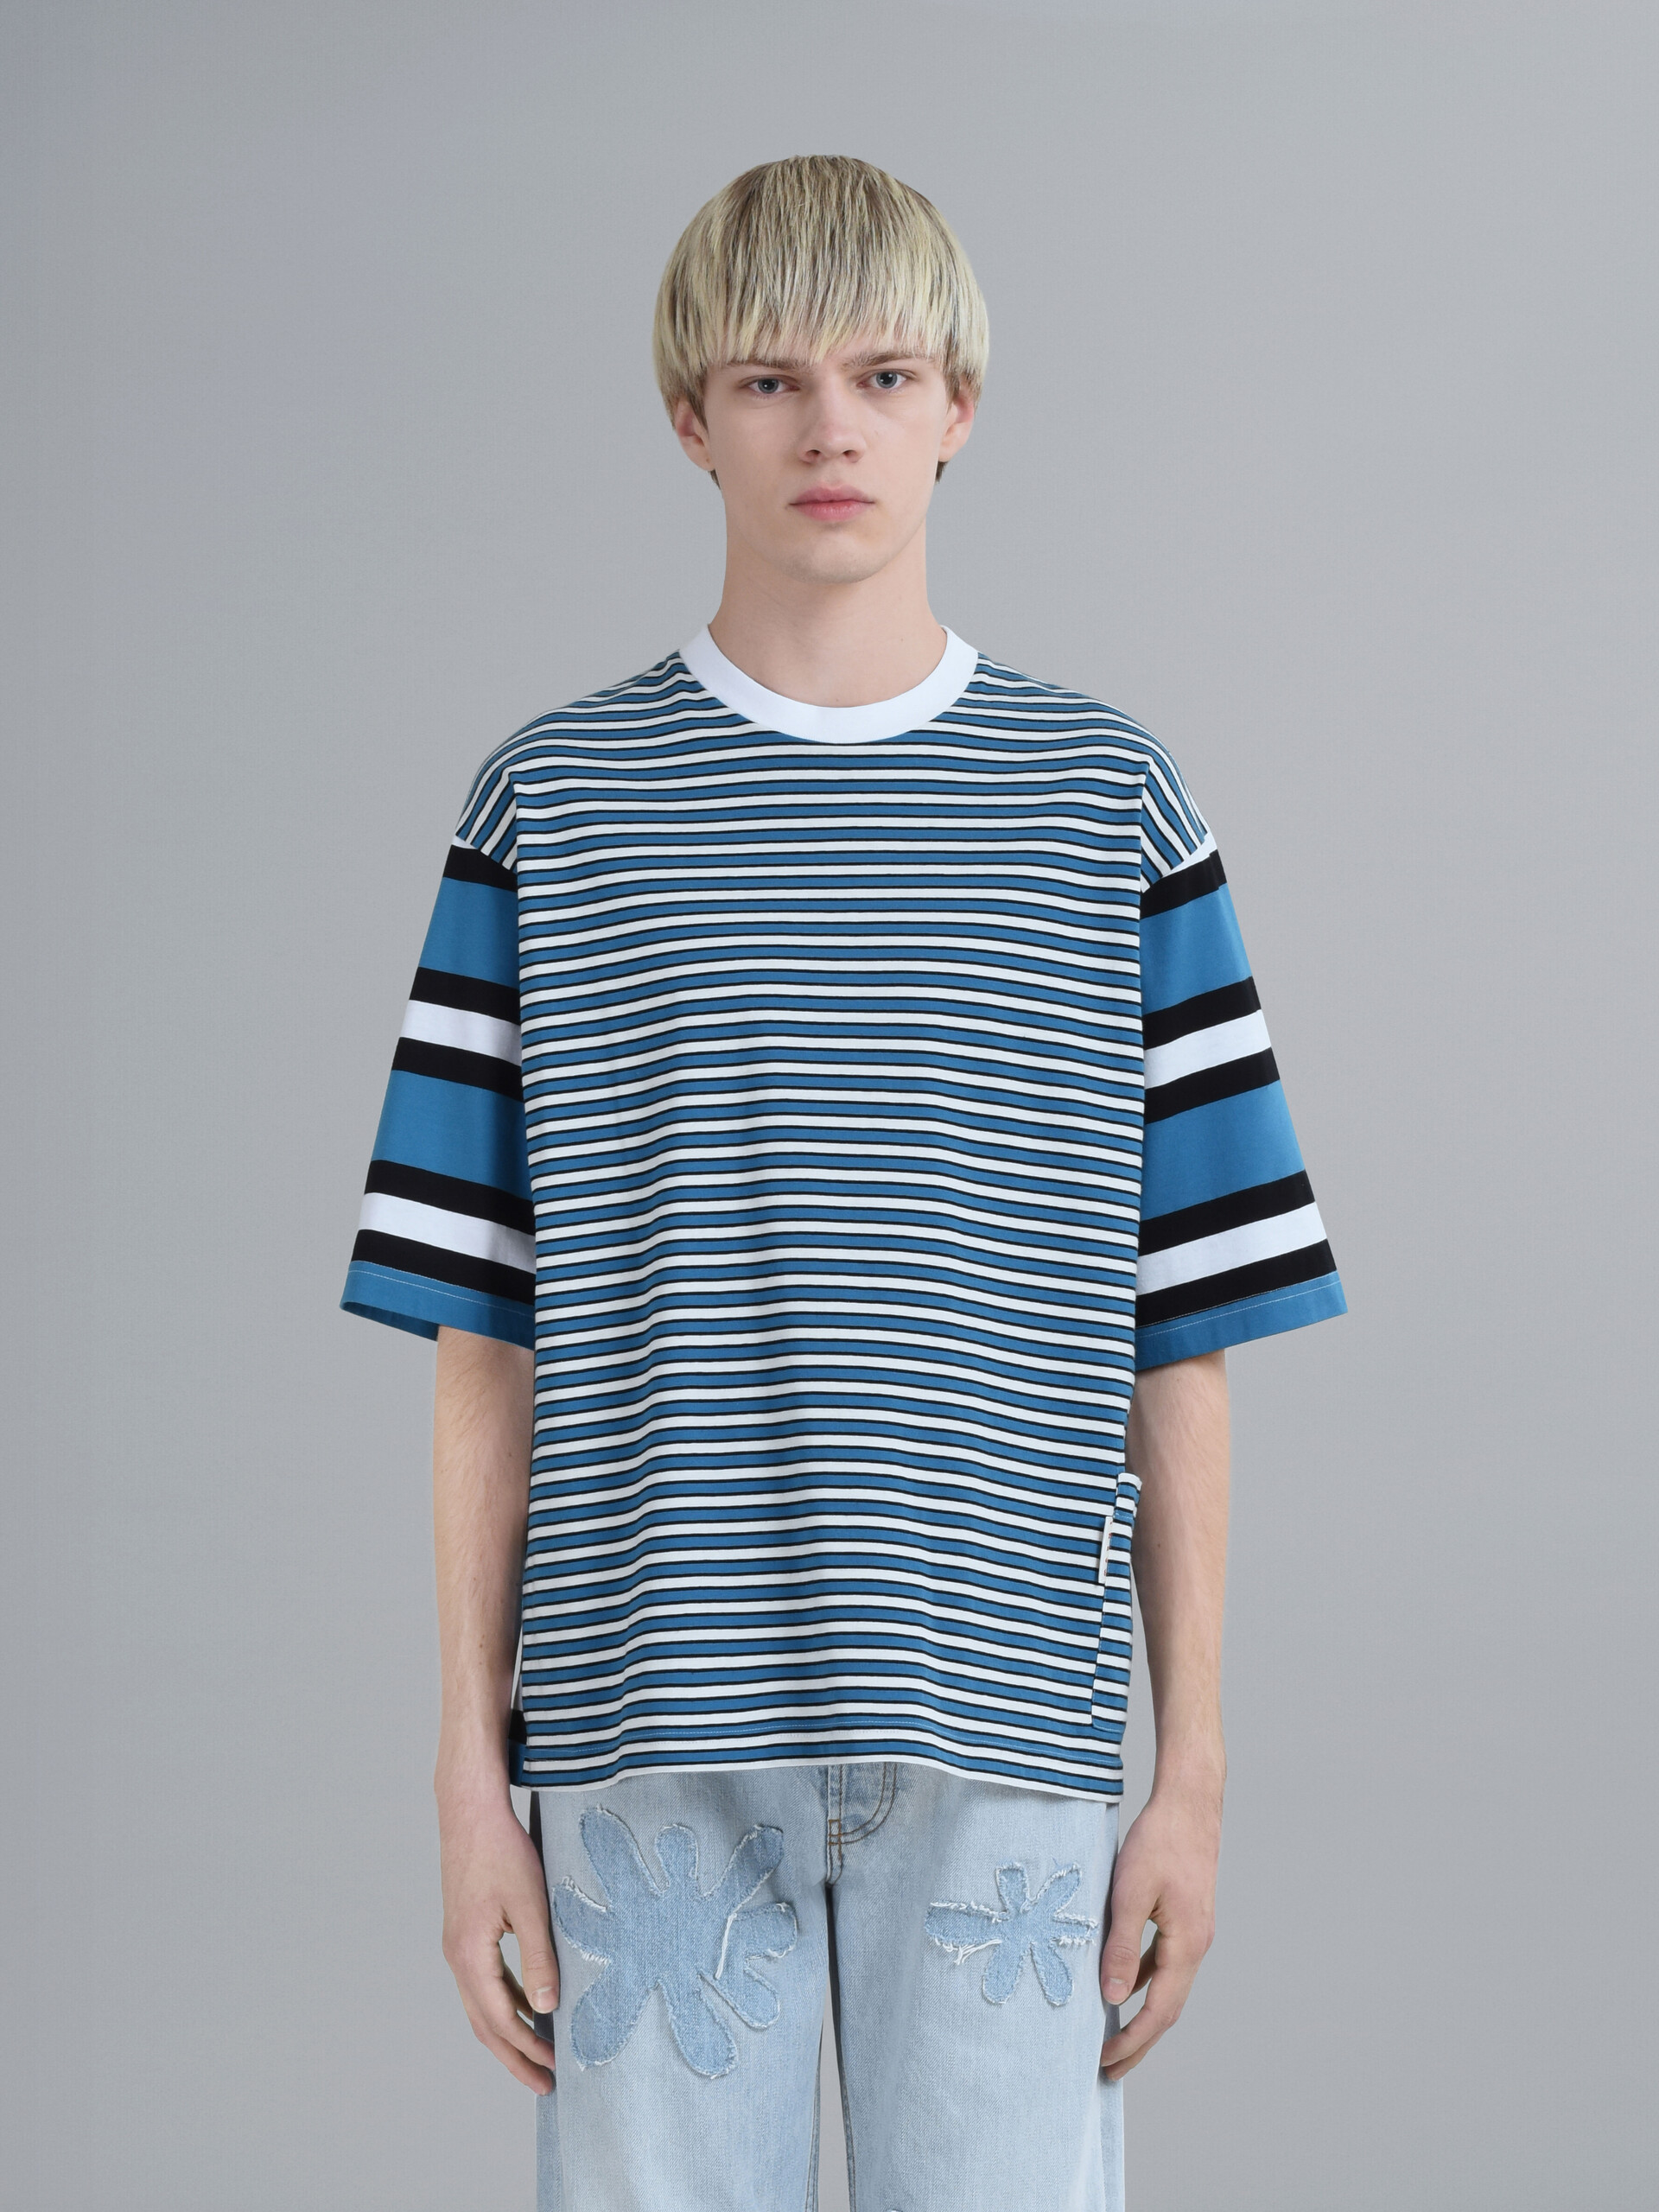 Blue striped cotton jersey crewneck T-shirt - T-shirts - Image 2